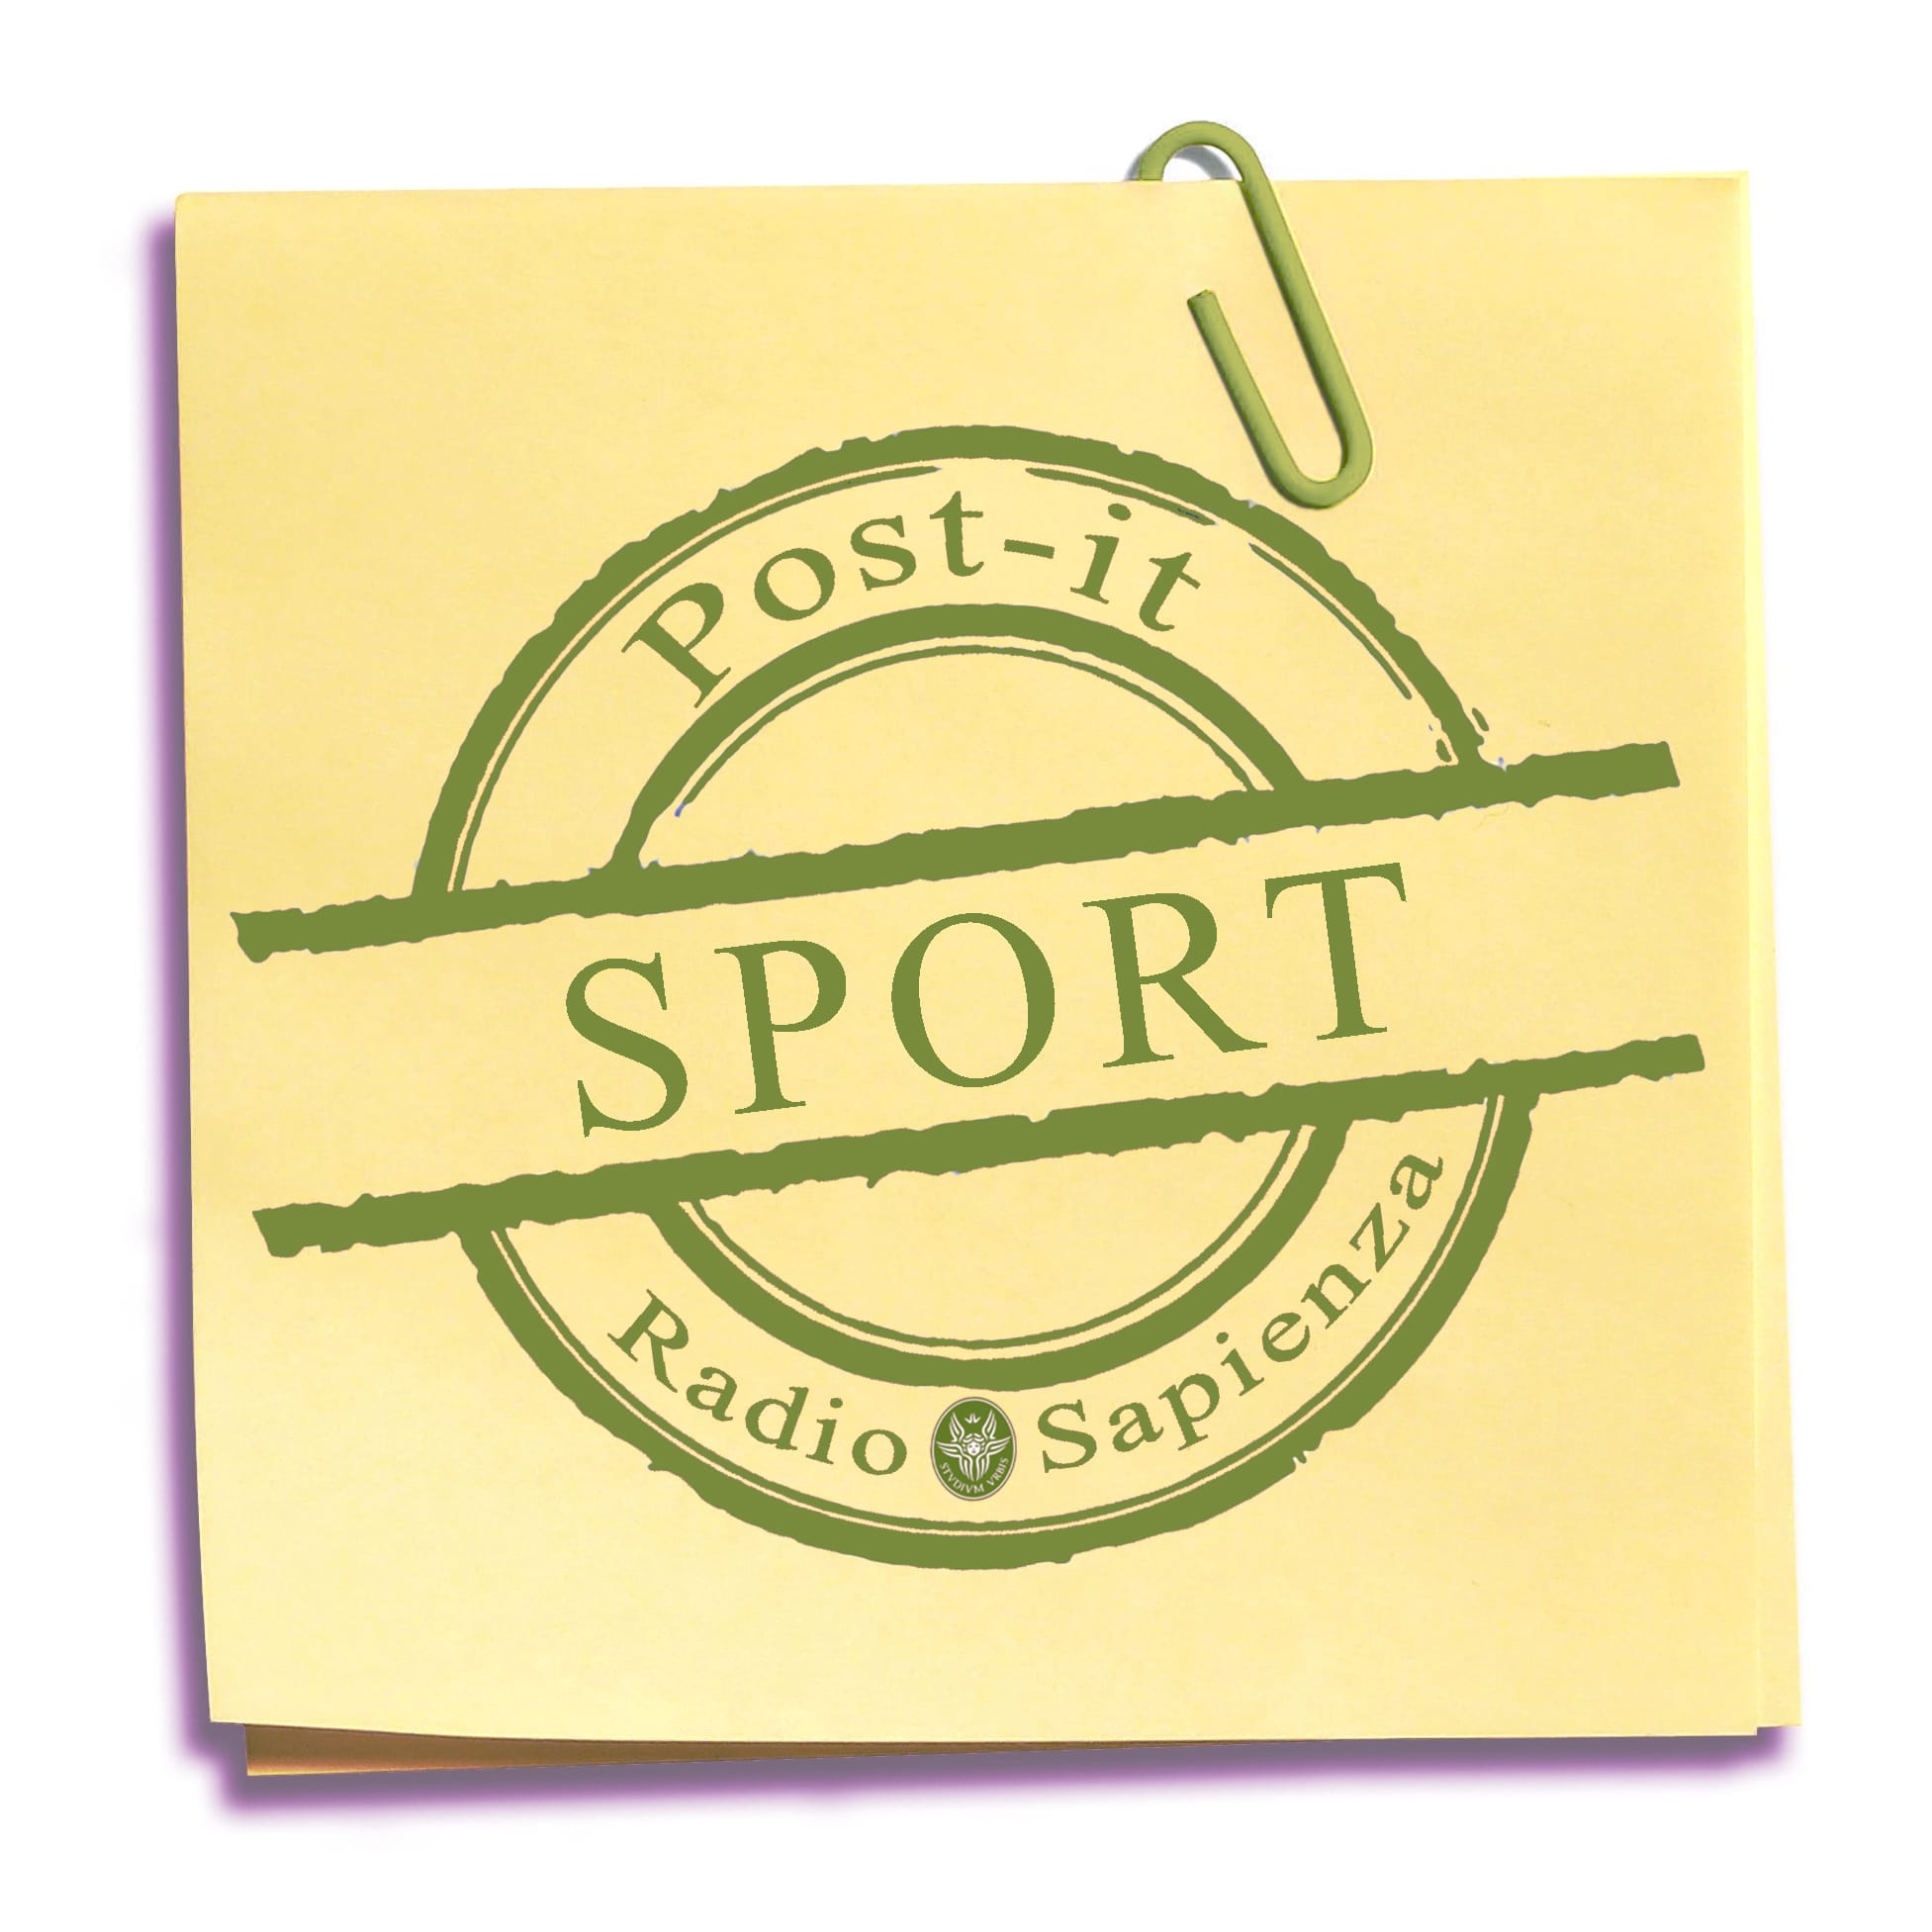 Post-it Sport – Martedì 1 giugno 2021